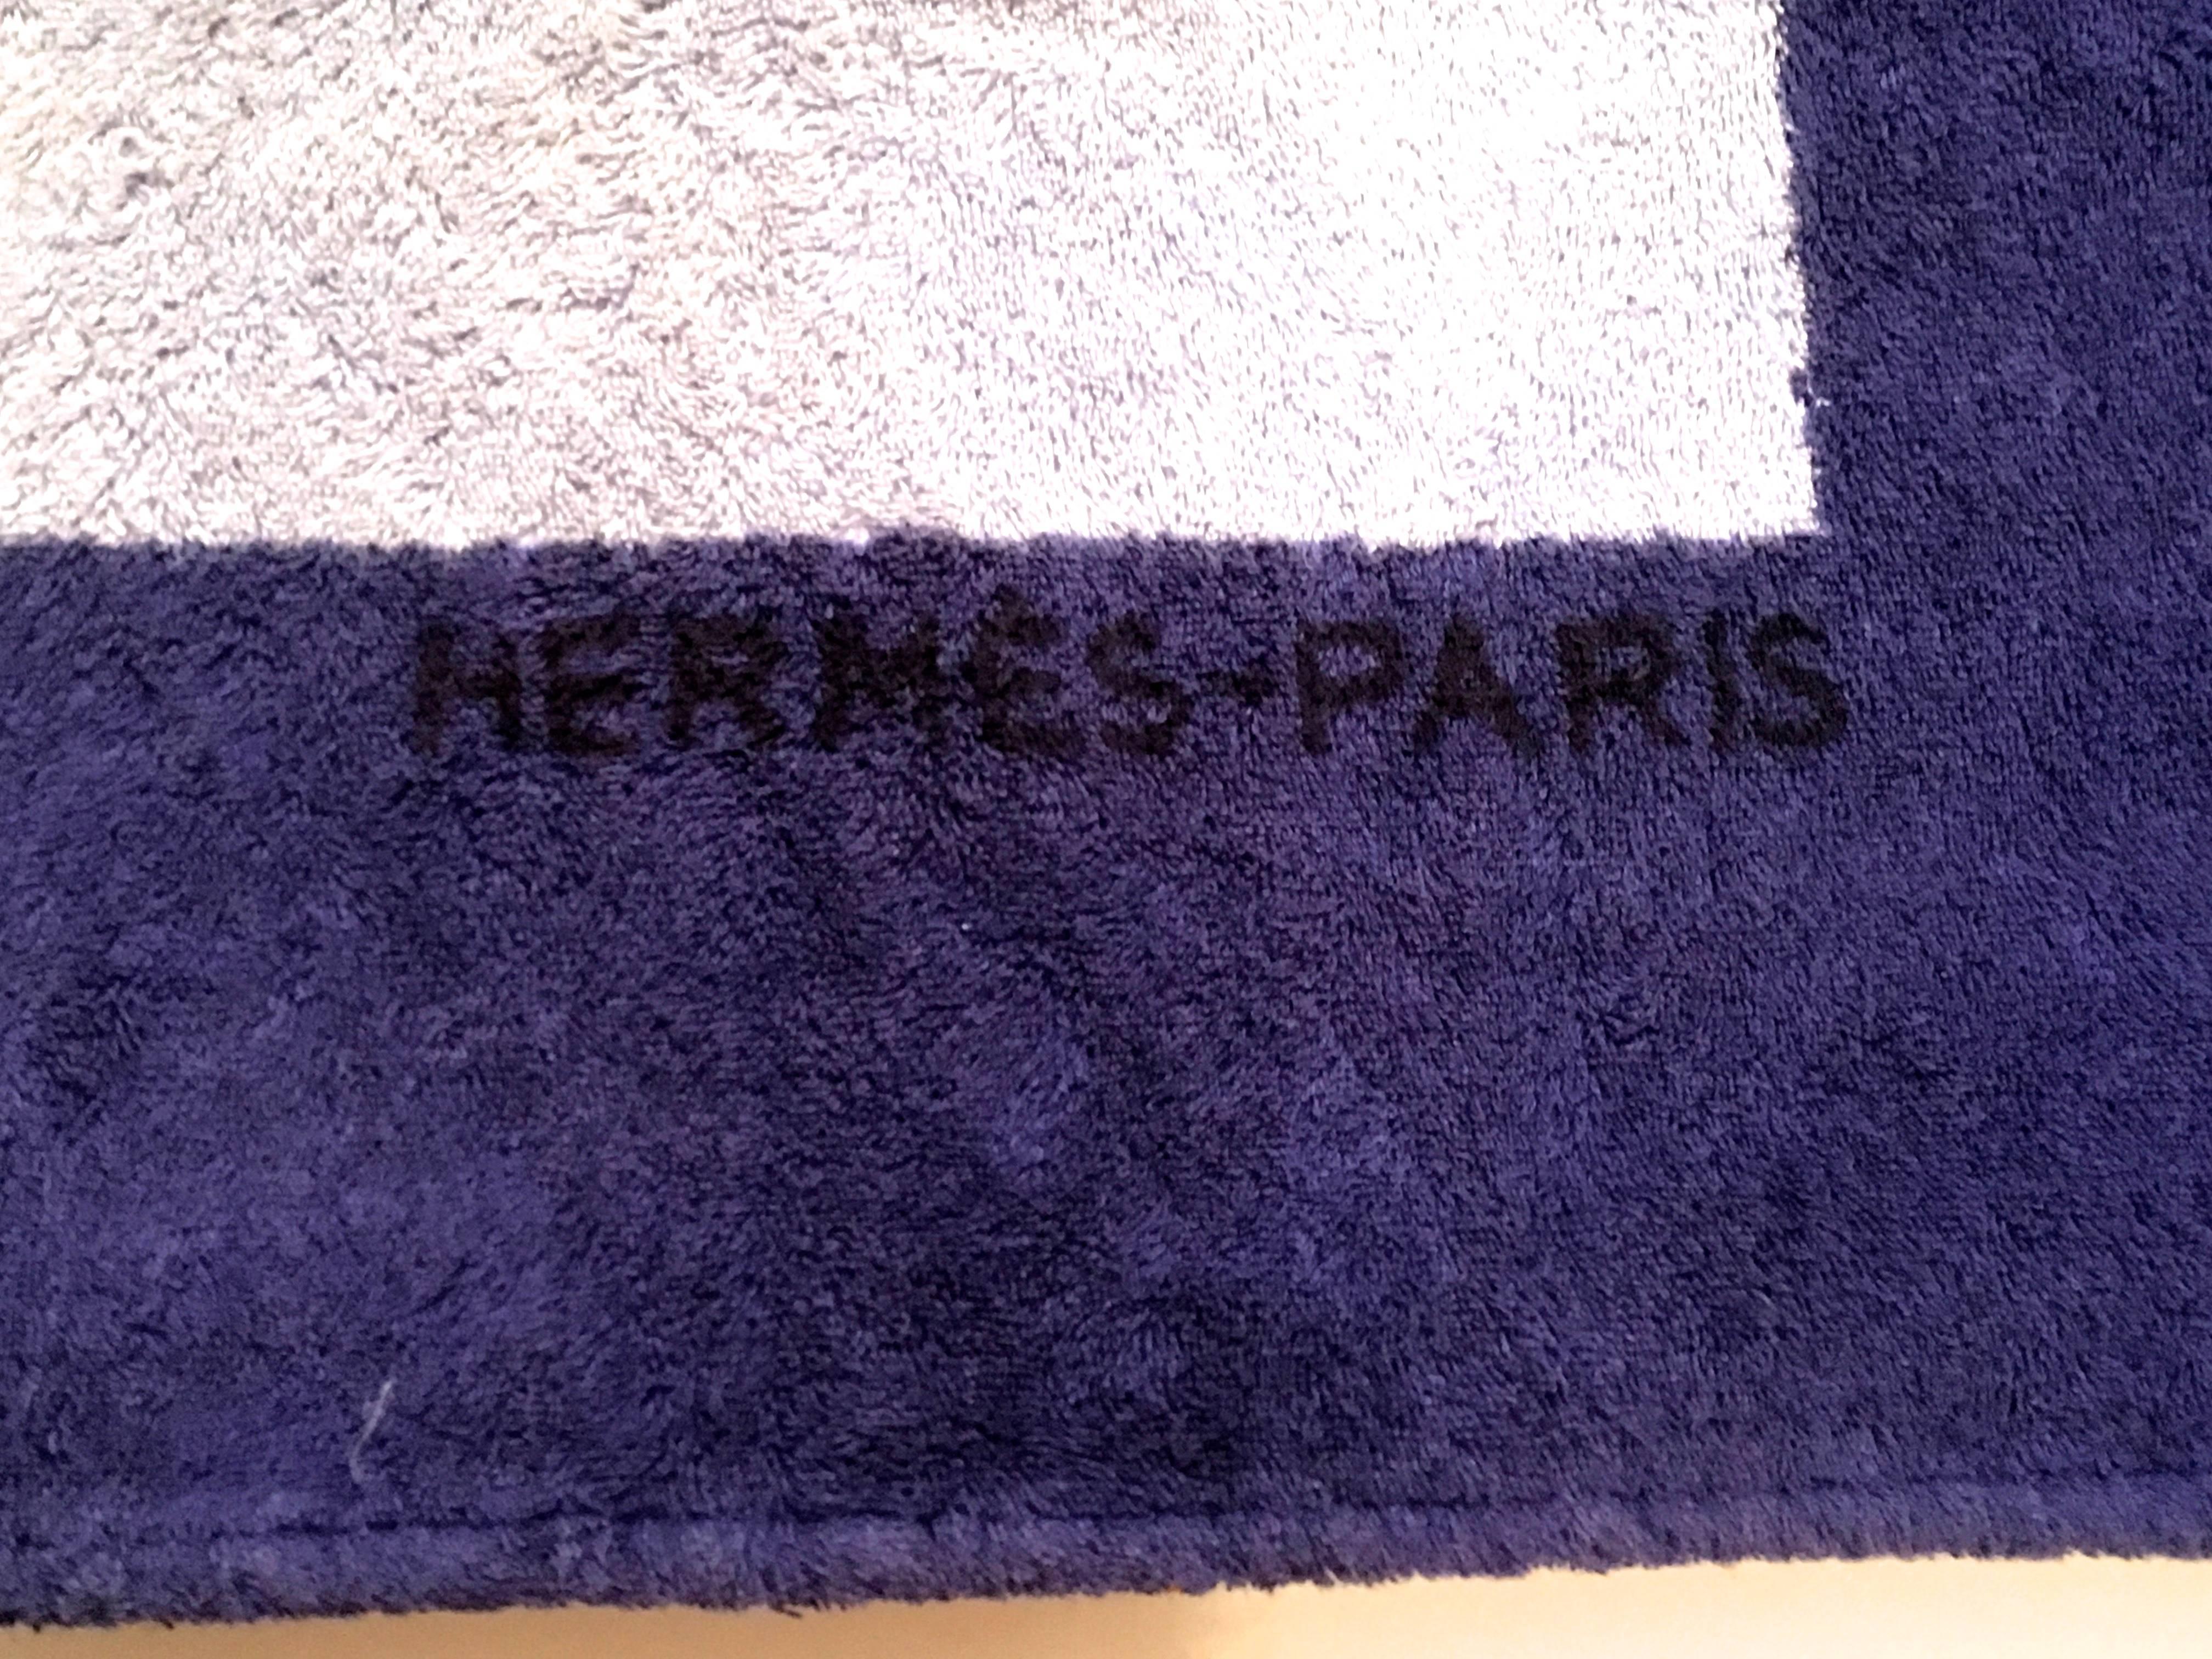 Hermes Beach Towel - 100% Cotton 1